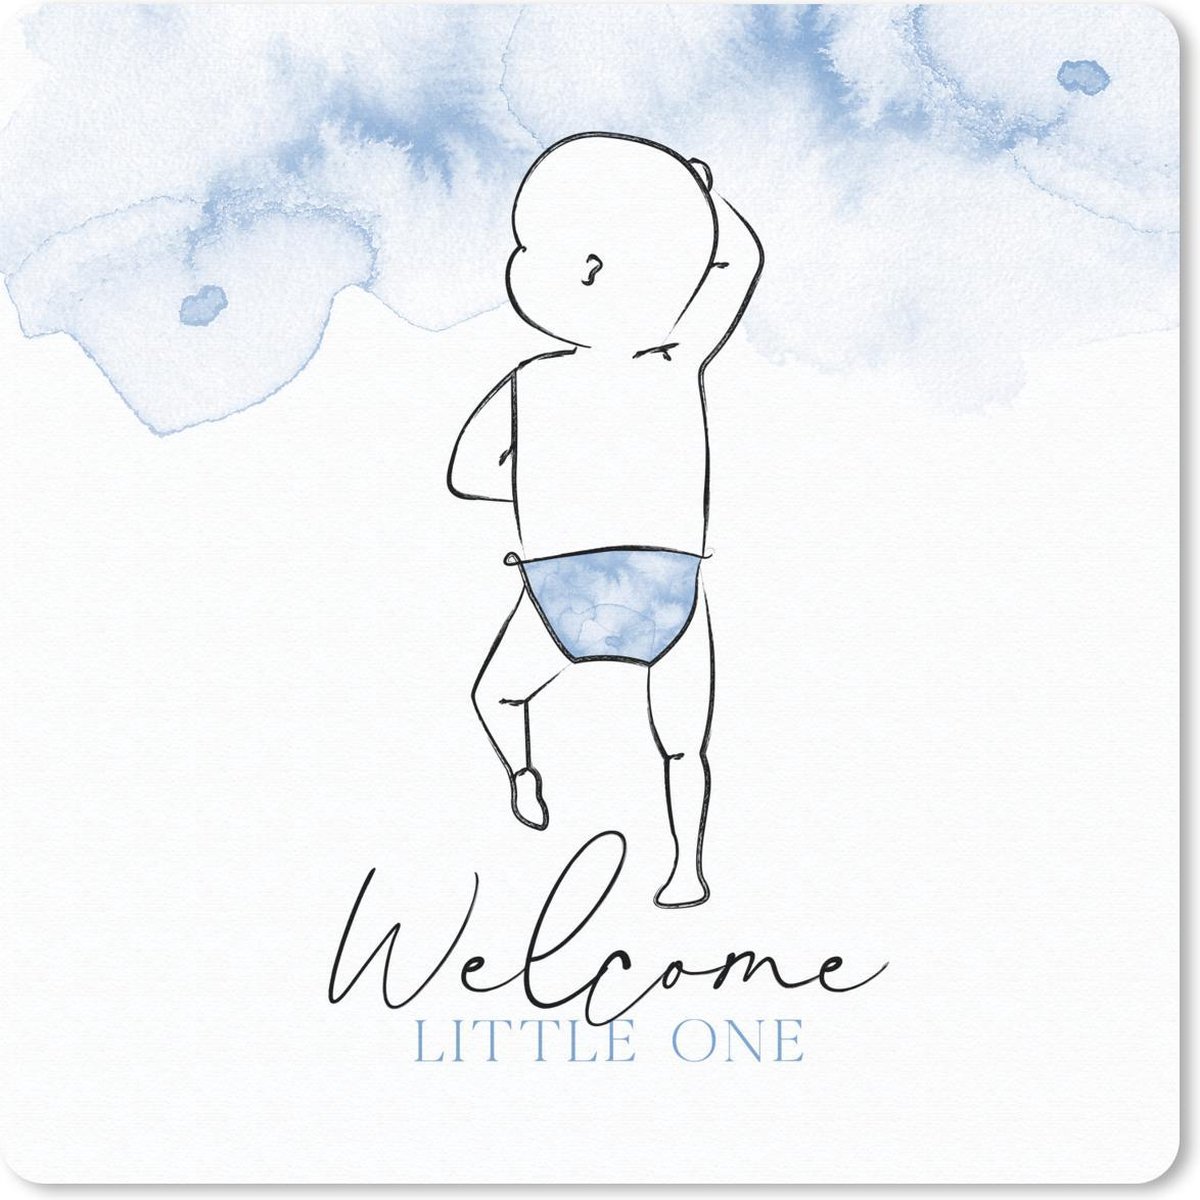 Muismat - Mousepad - Spreuken - Welcome little one - Baby - Quotes - Geboorte - 30x30 cm - Muismatten